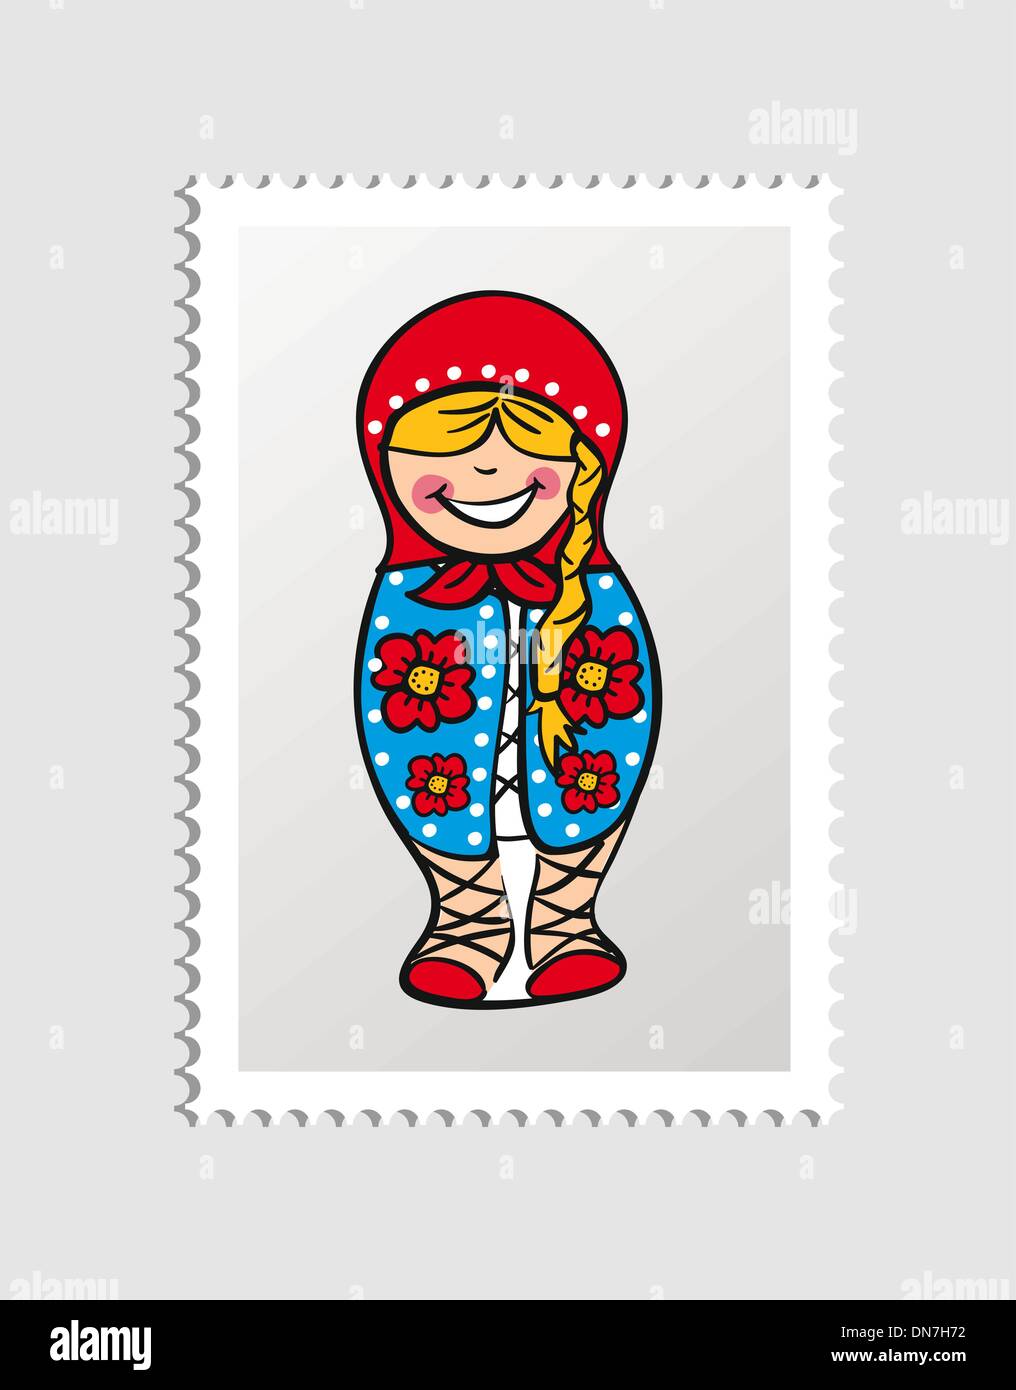 Russian cartoon person postal stamp Stock Vector